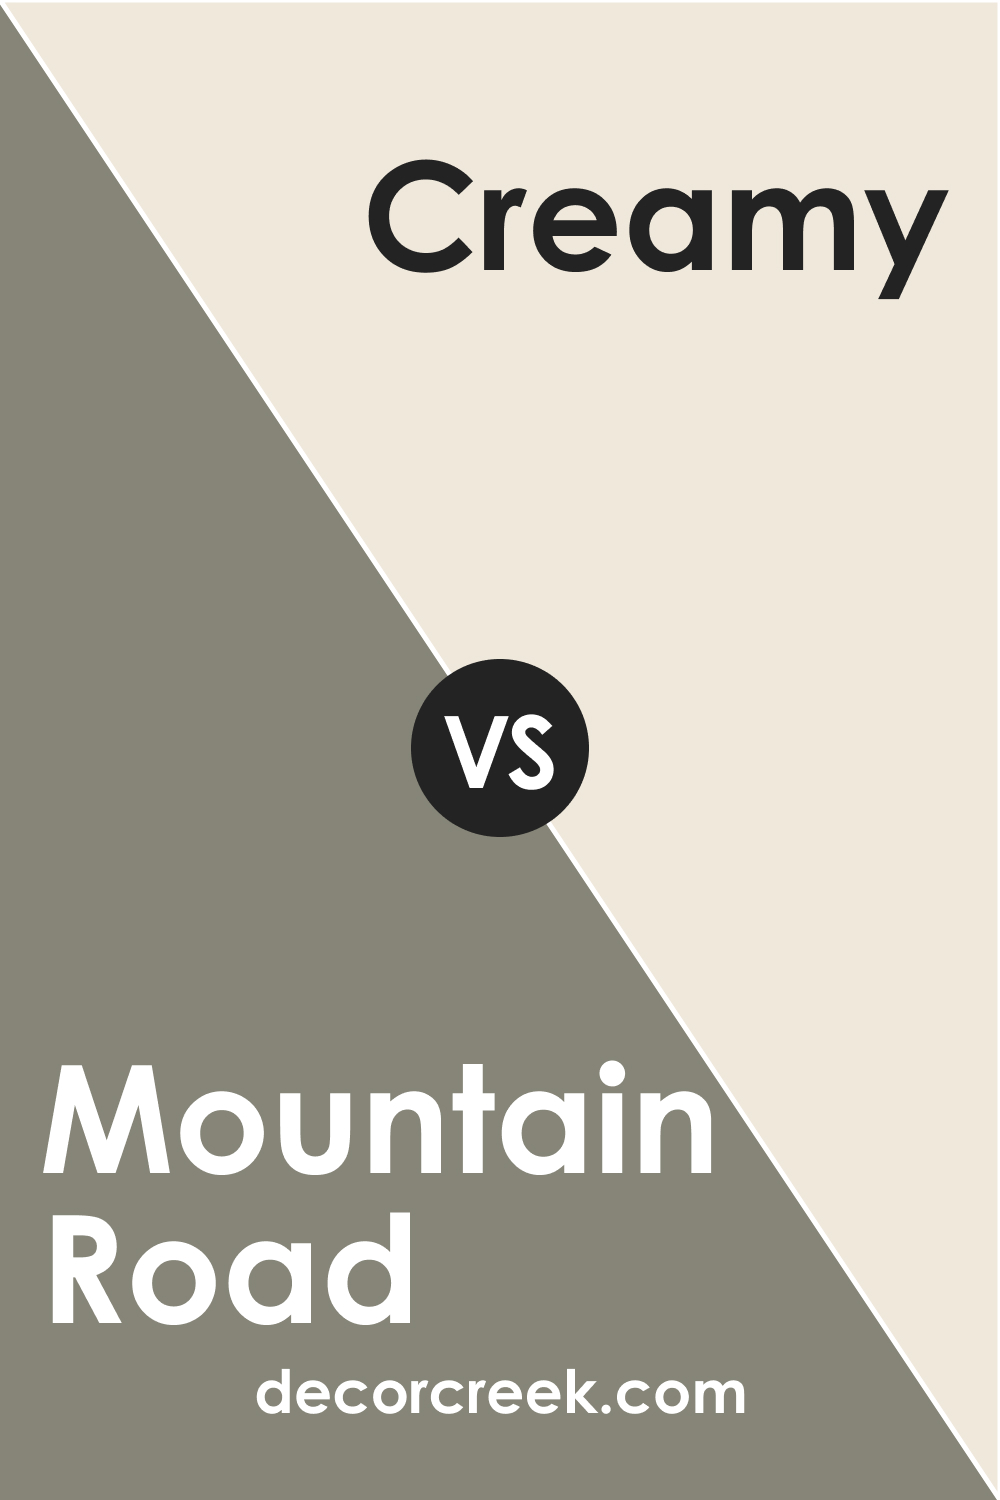 SW 7743 Mountain Road vs. SW Creamy